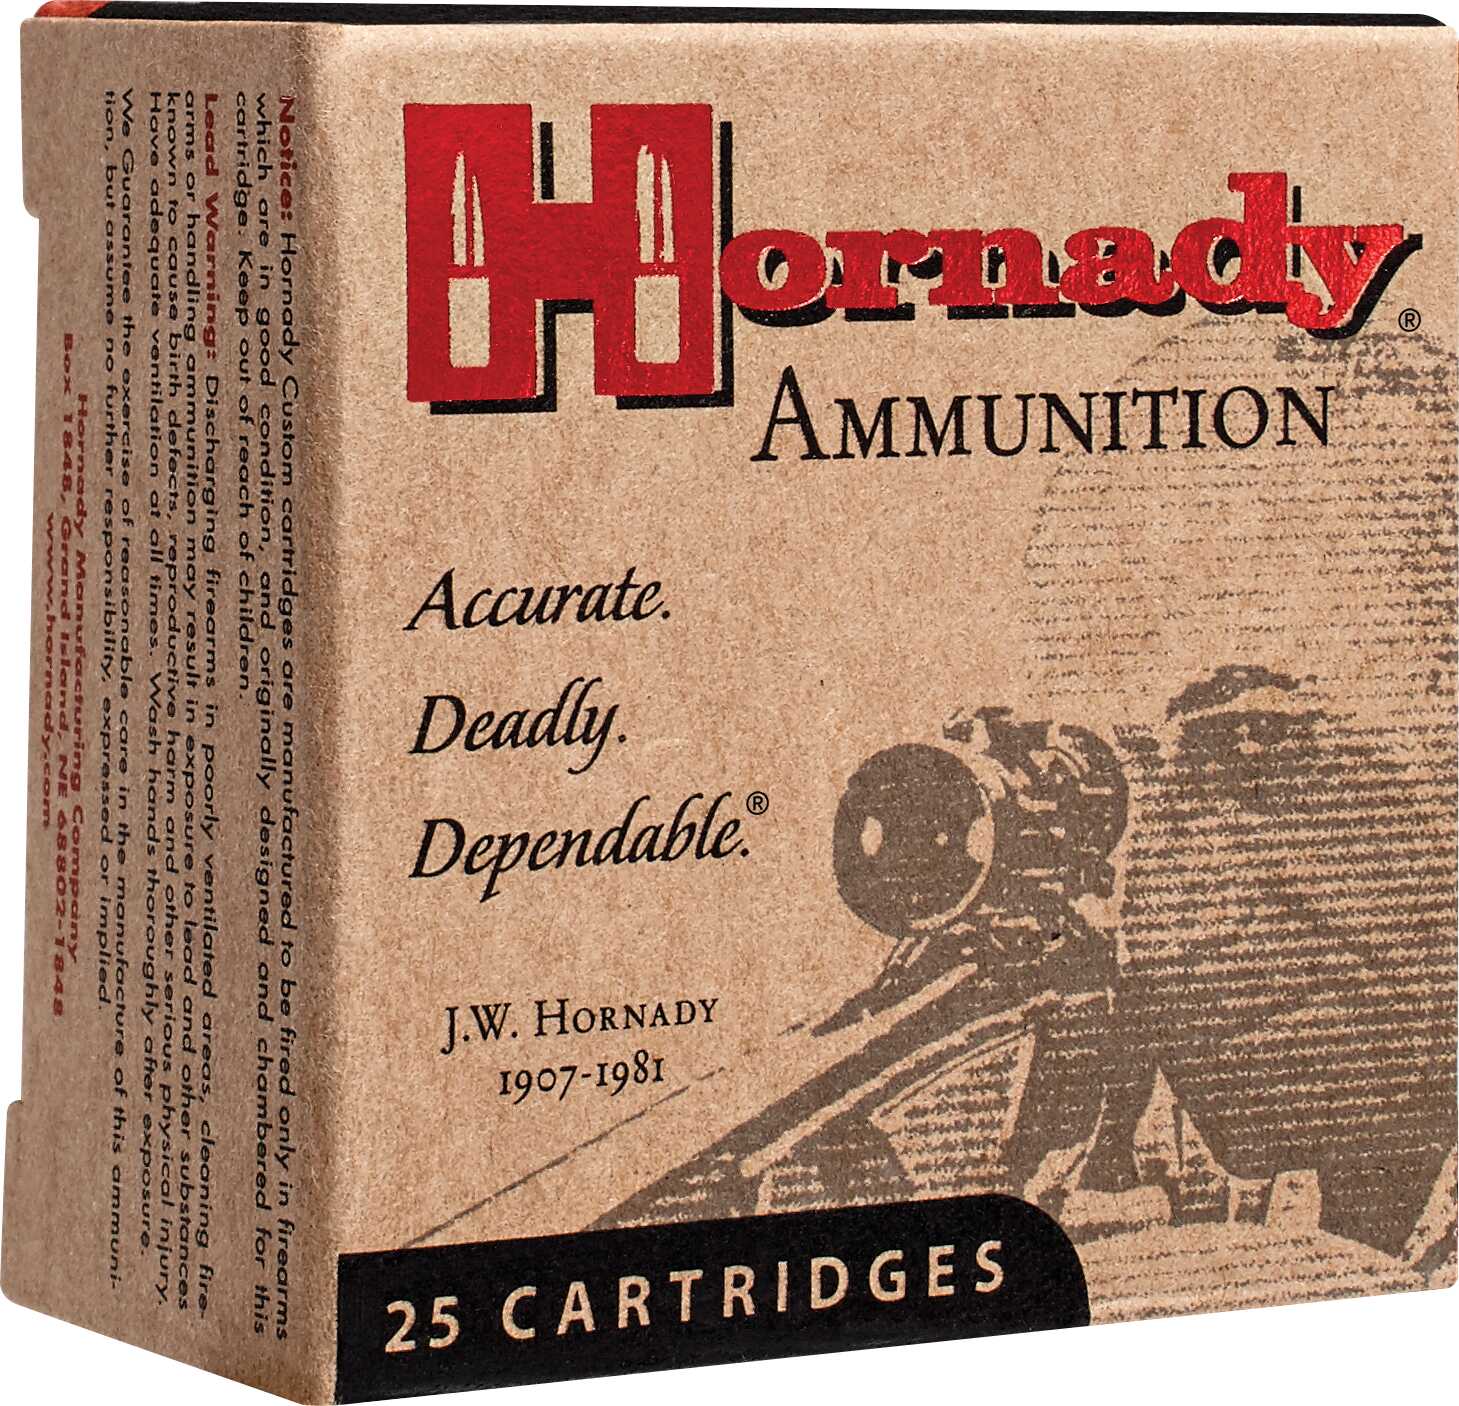 500 S&W Grain Hollow Point 20 Rounds Hornady Ammunition